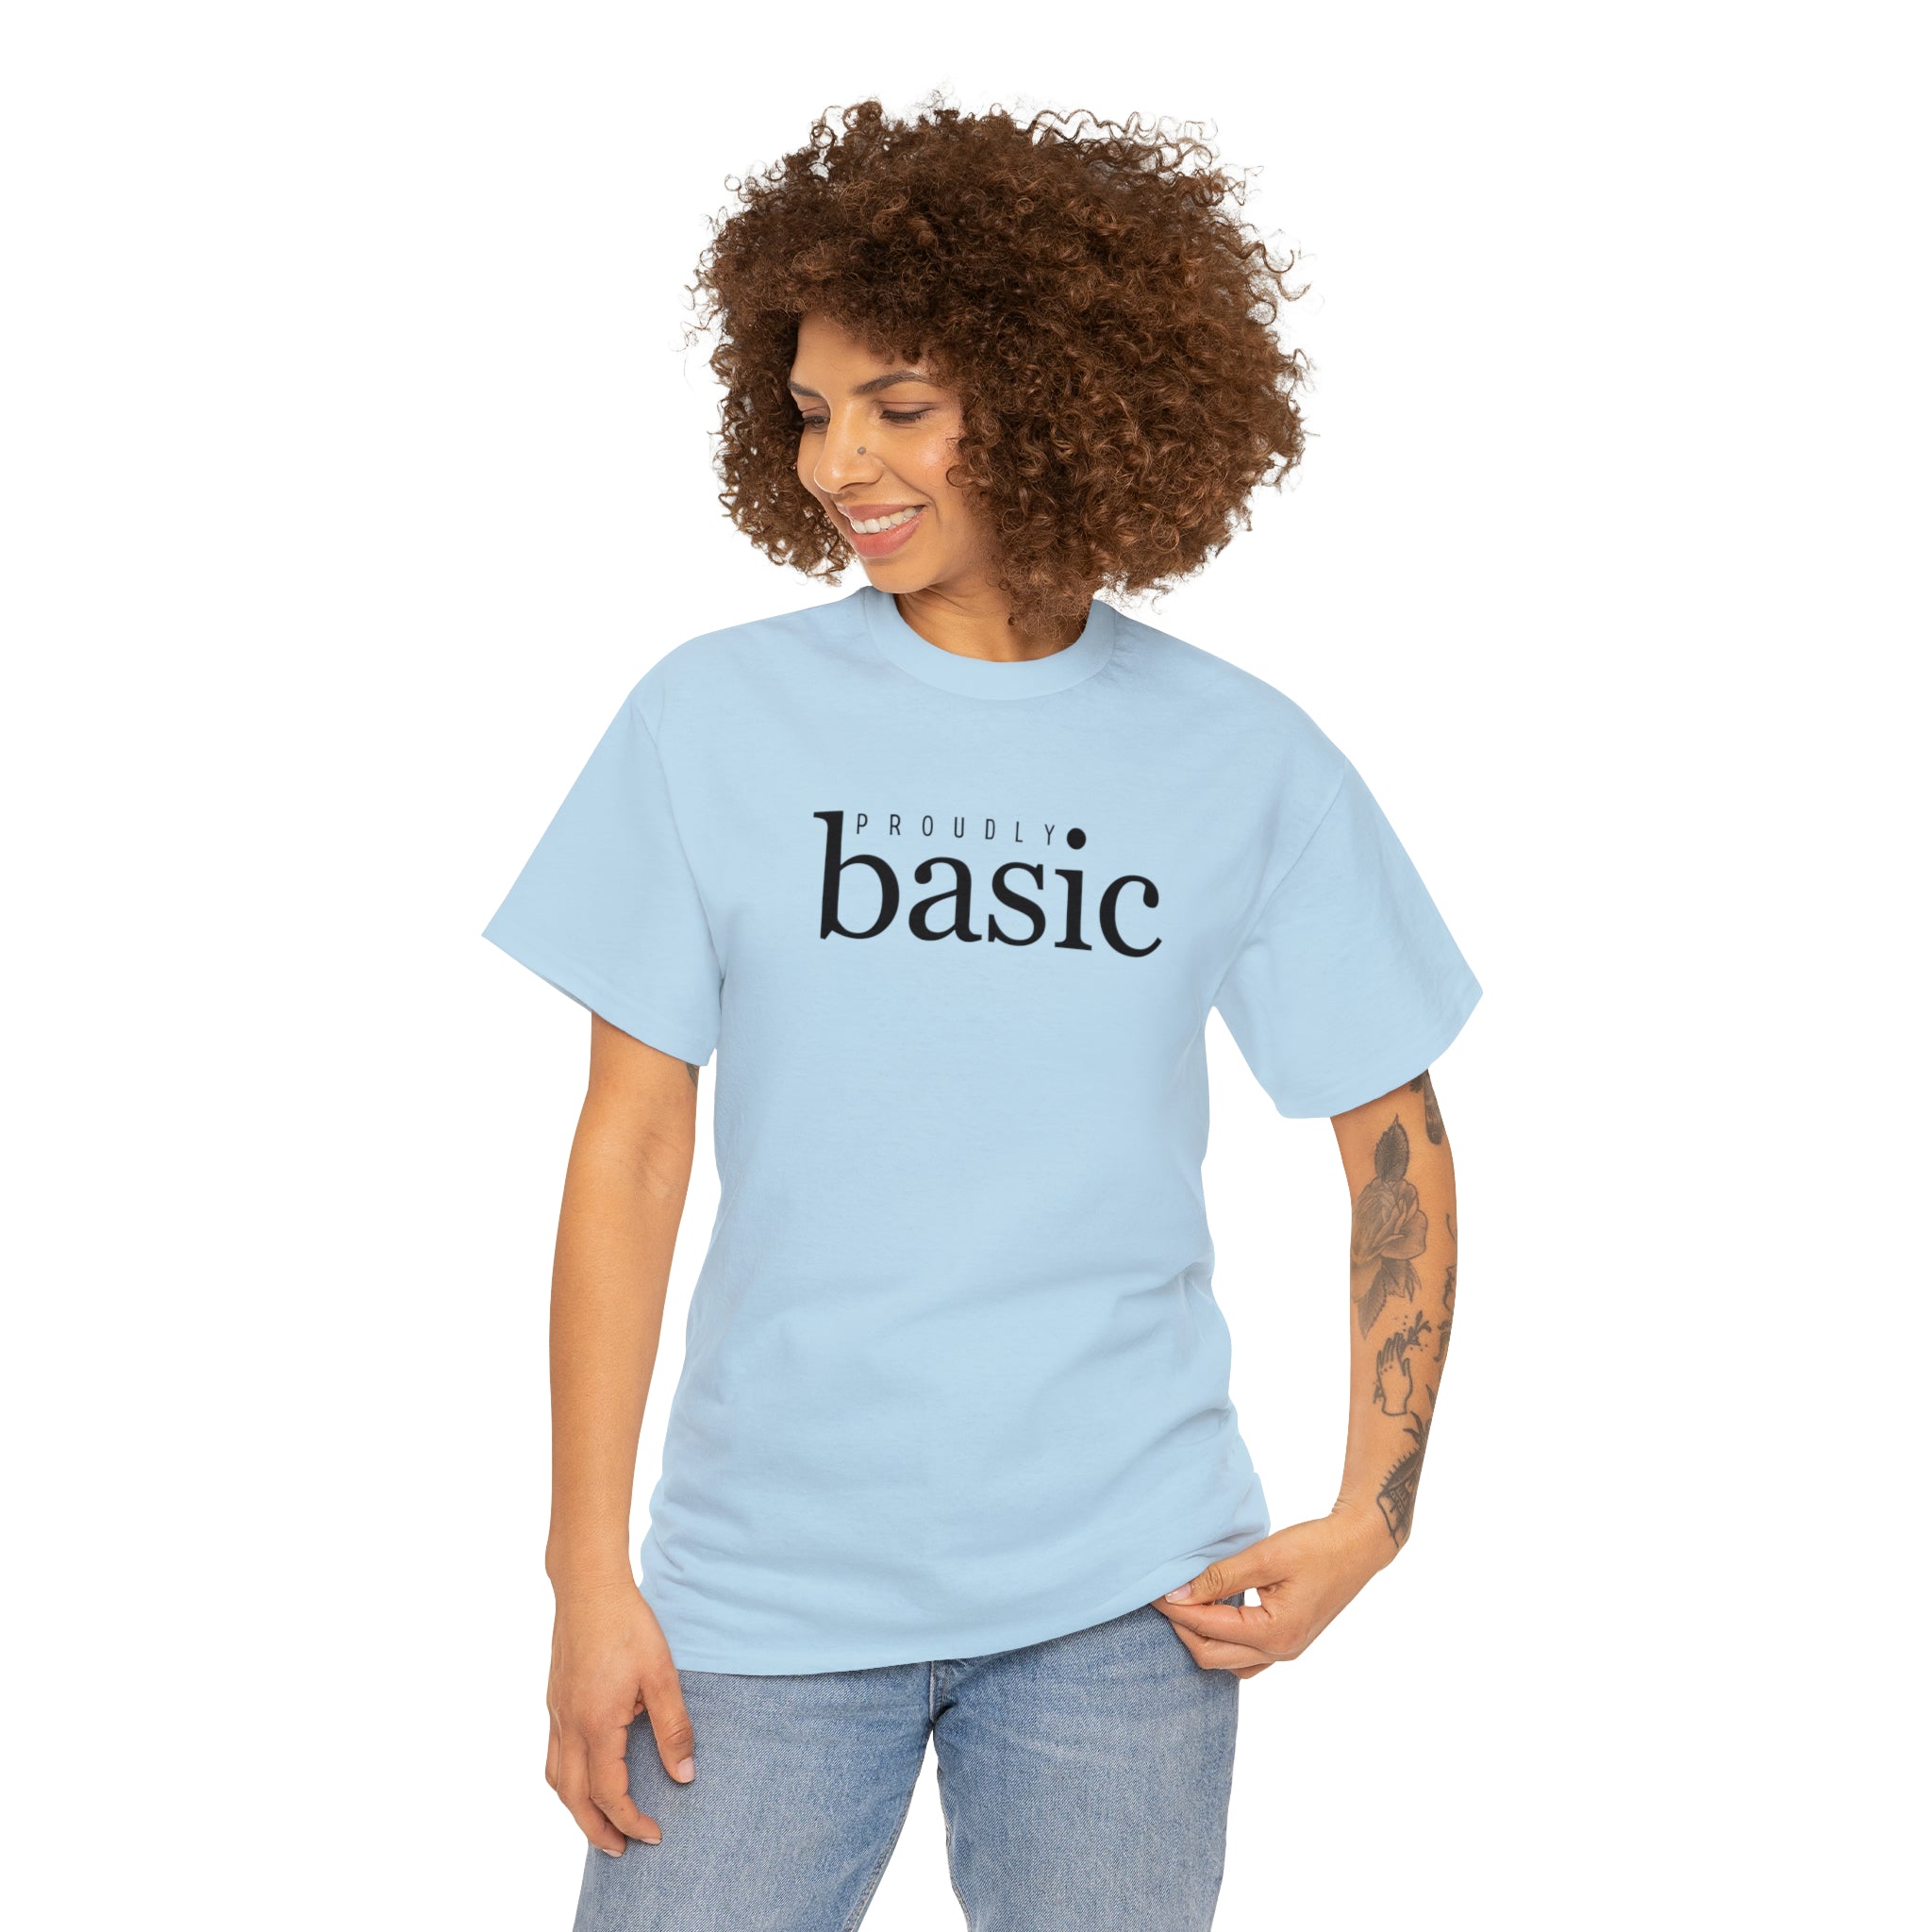  Proudly BASIC Relaxed-Fit Cotton T-Shirt, Female Empowerment Shirt, Cute Graphic T-shirt T-ShirtLightBlue5XL